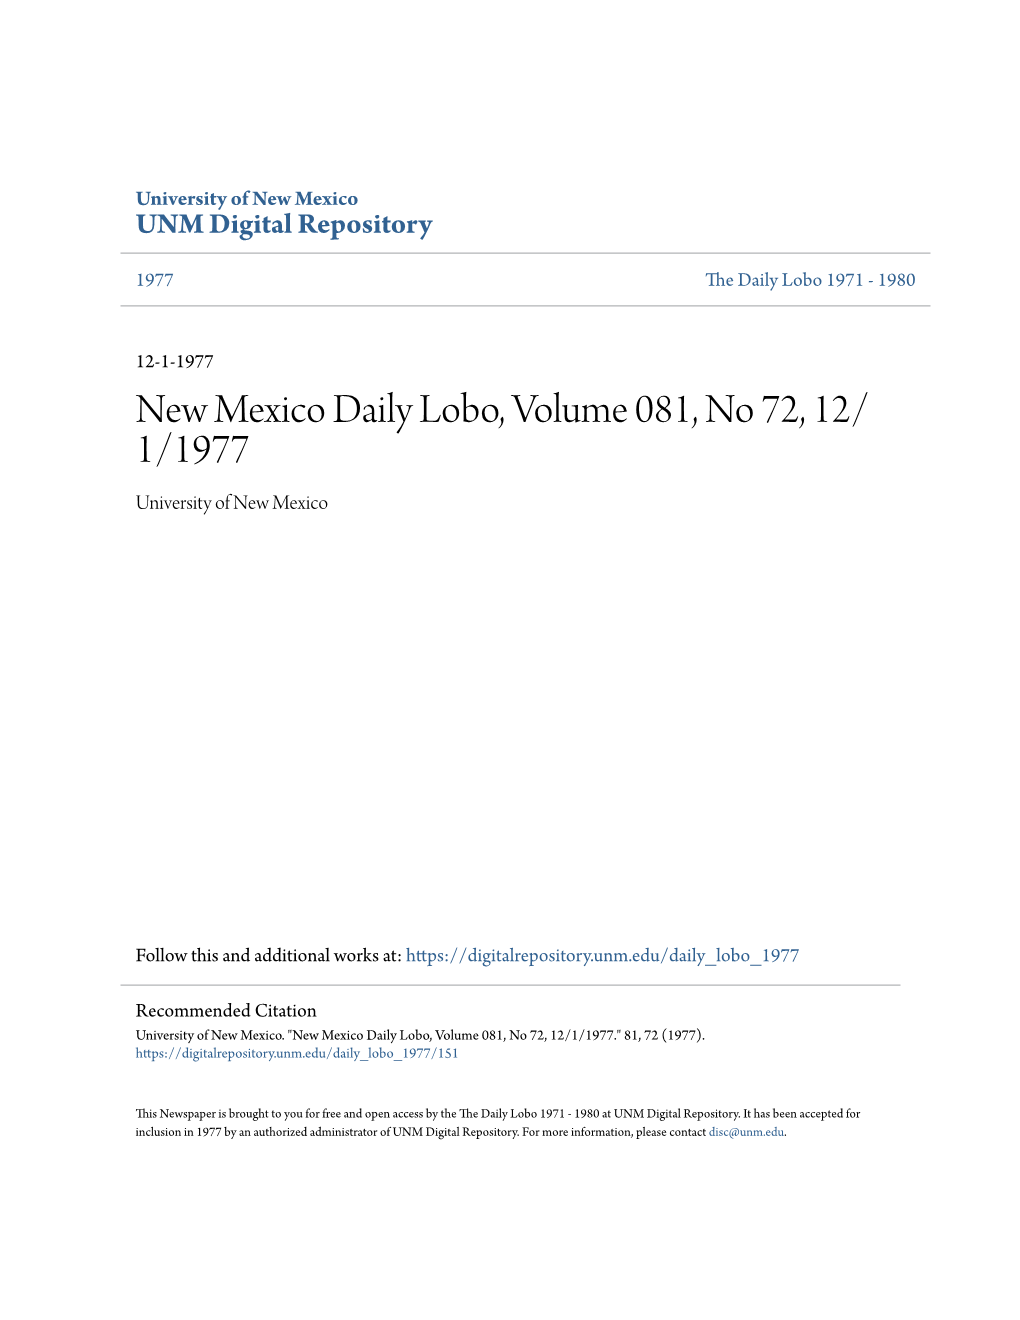 New Mexico Daily Lobo, Volume 081, No 72, 12/1/1977." 81, 72 (1977)